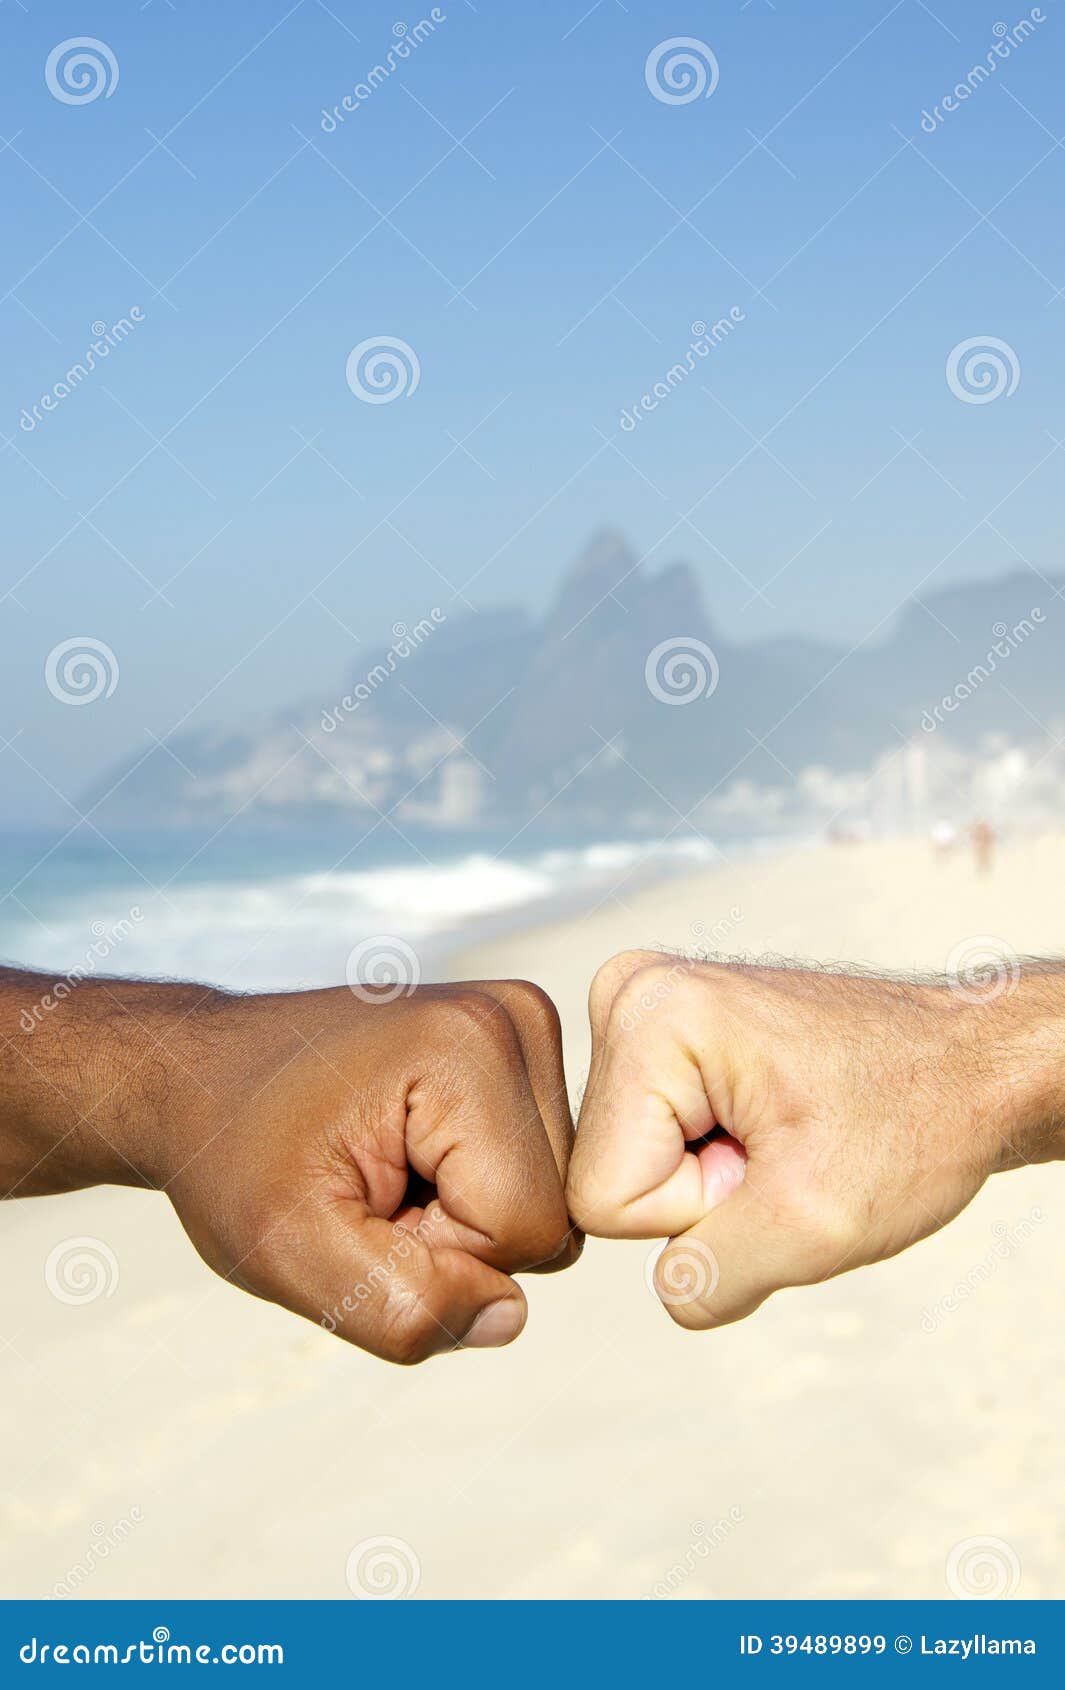 Brazilian Diversity Interracial Hands Together Rio Brazil. Fist bump Brazilian diversity interracial hands cooperating together Ipanema Beach Rio de Janeiro Brazil